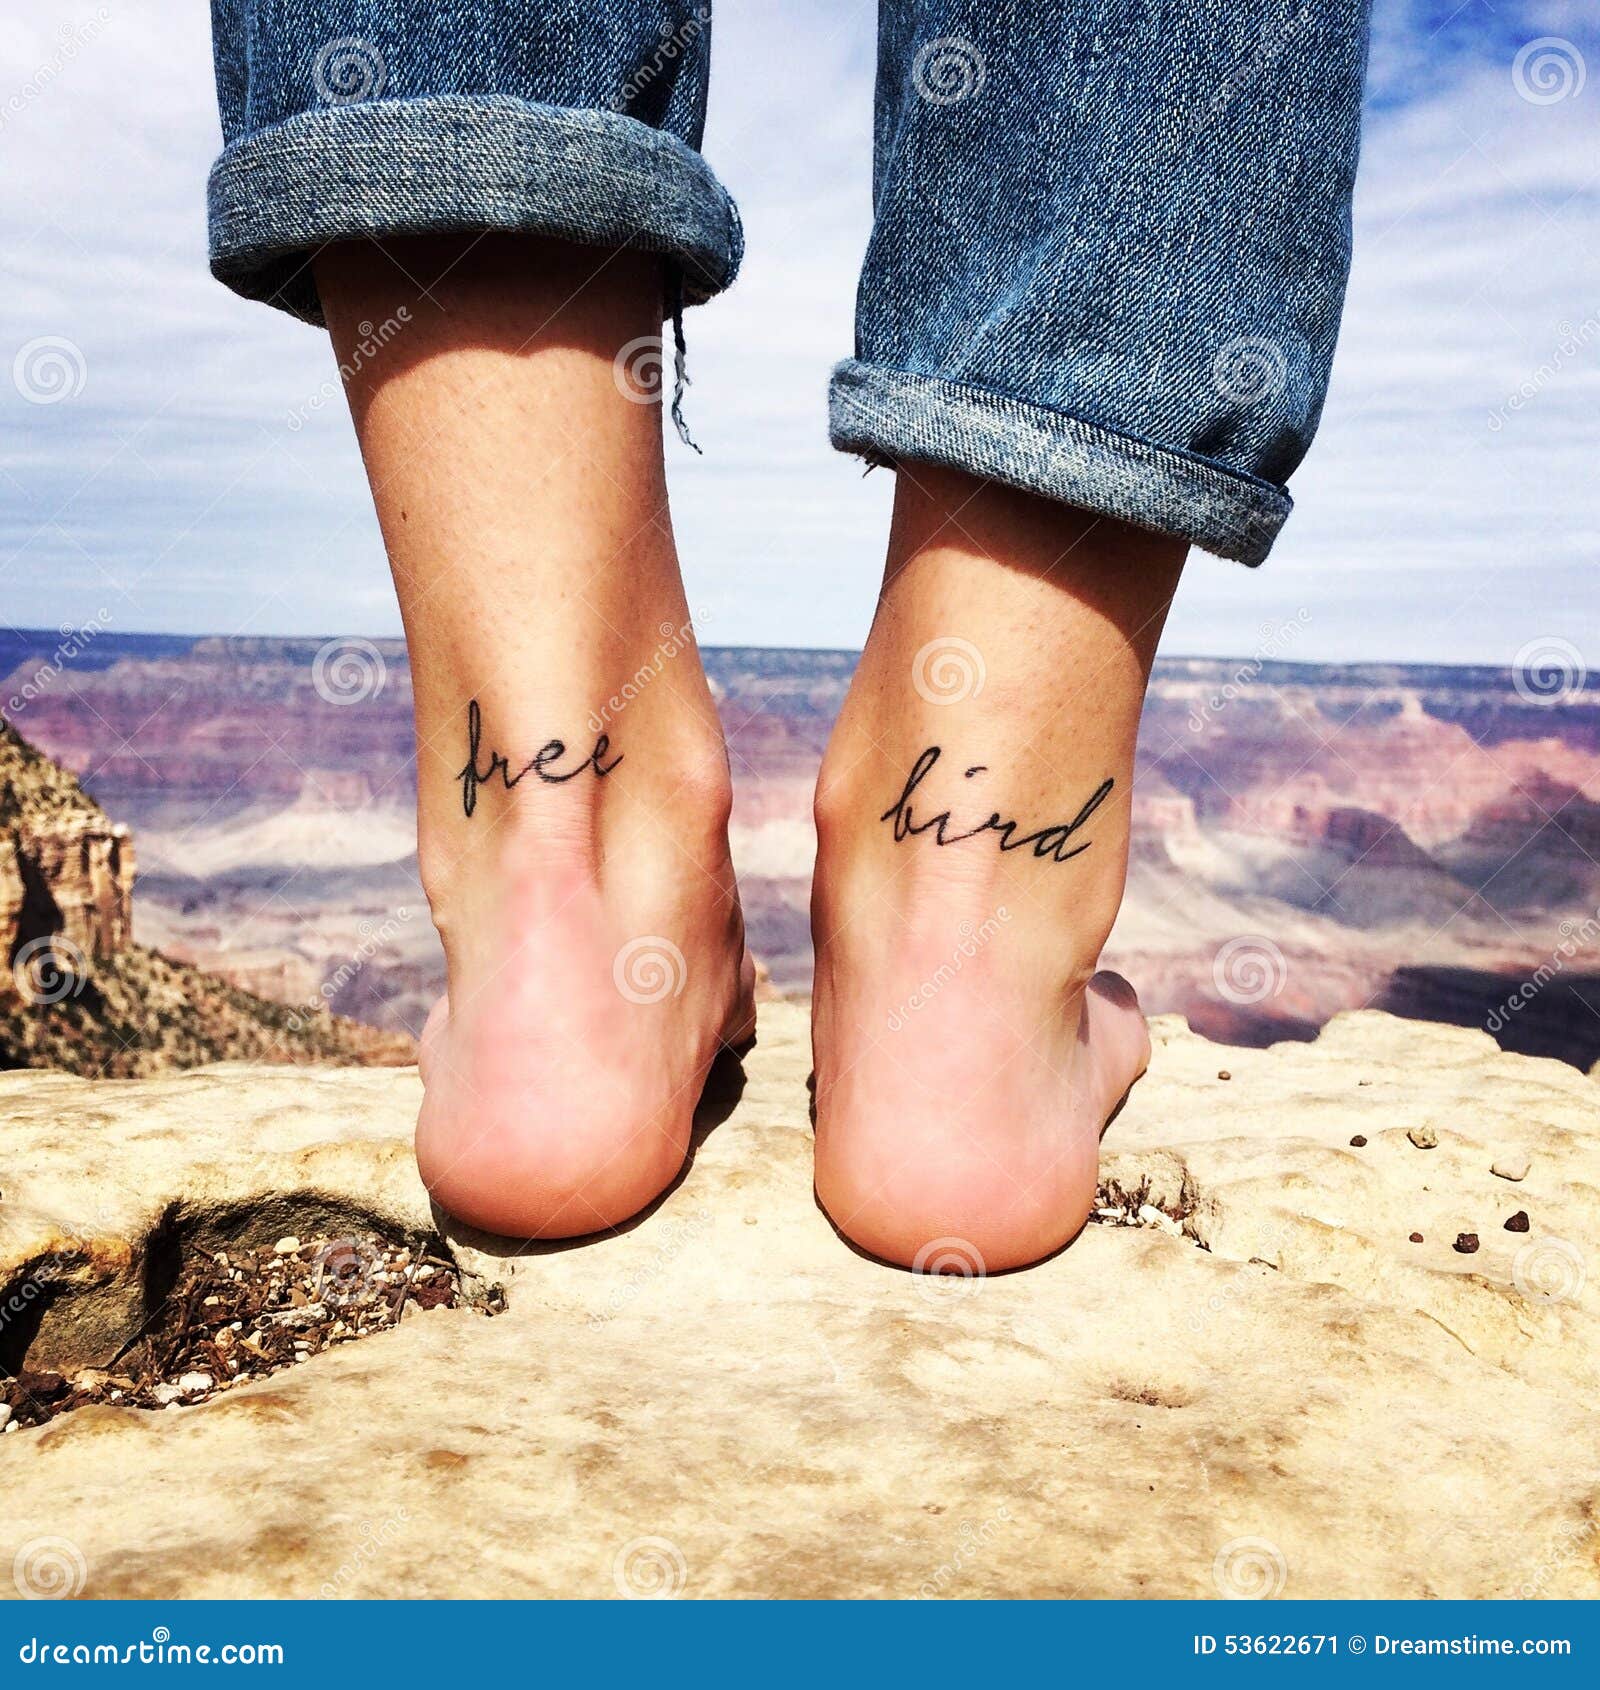 canyon tattoo  Google Search  Tattoos Hiking tattoo Nature tattoos